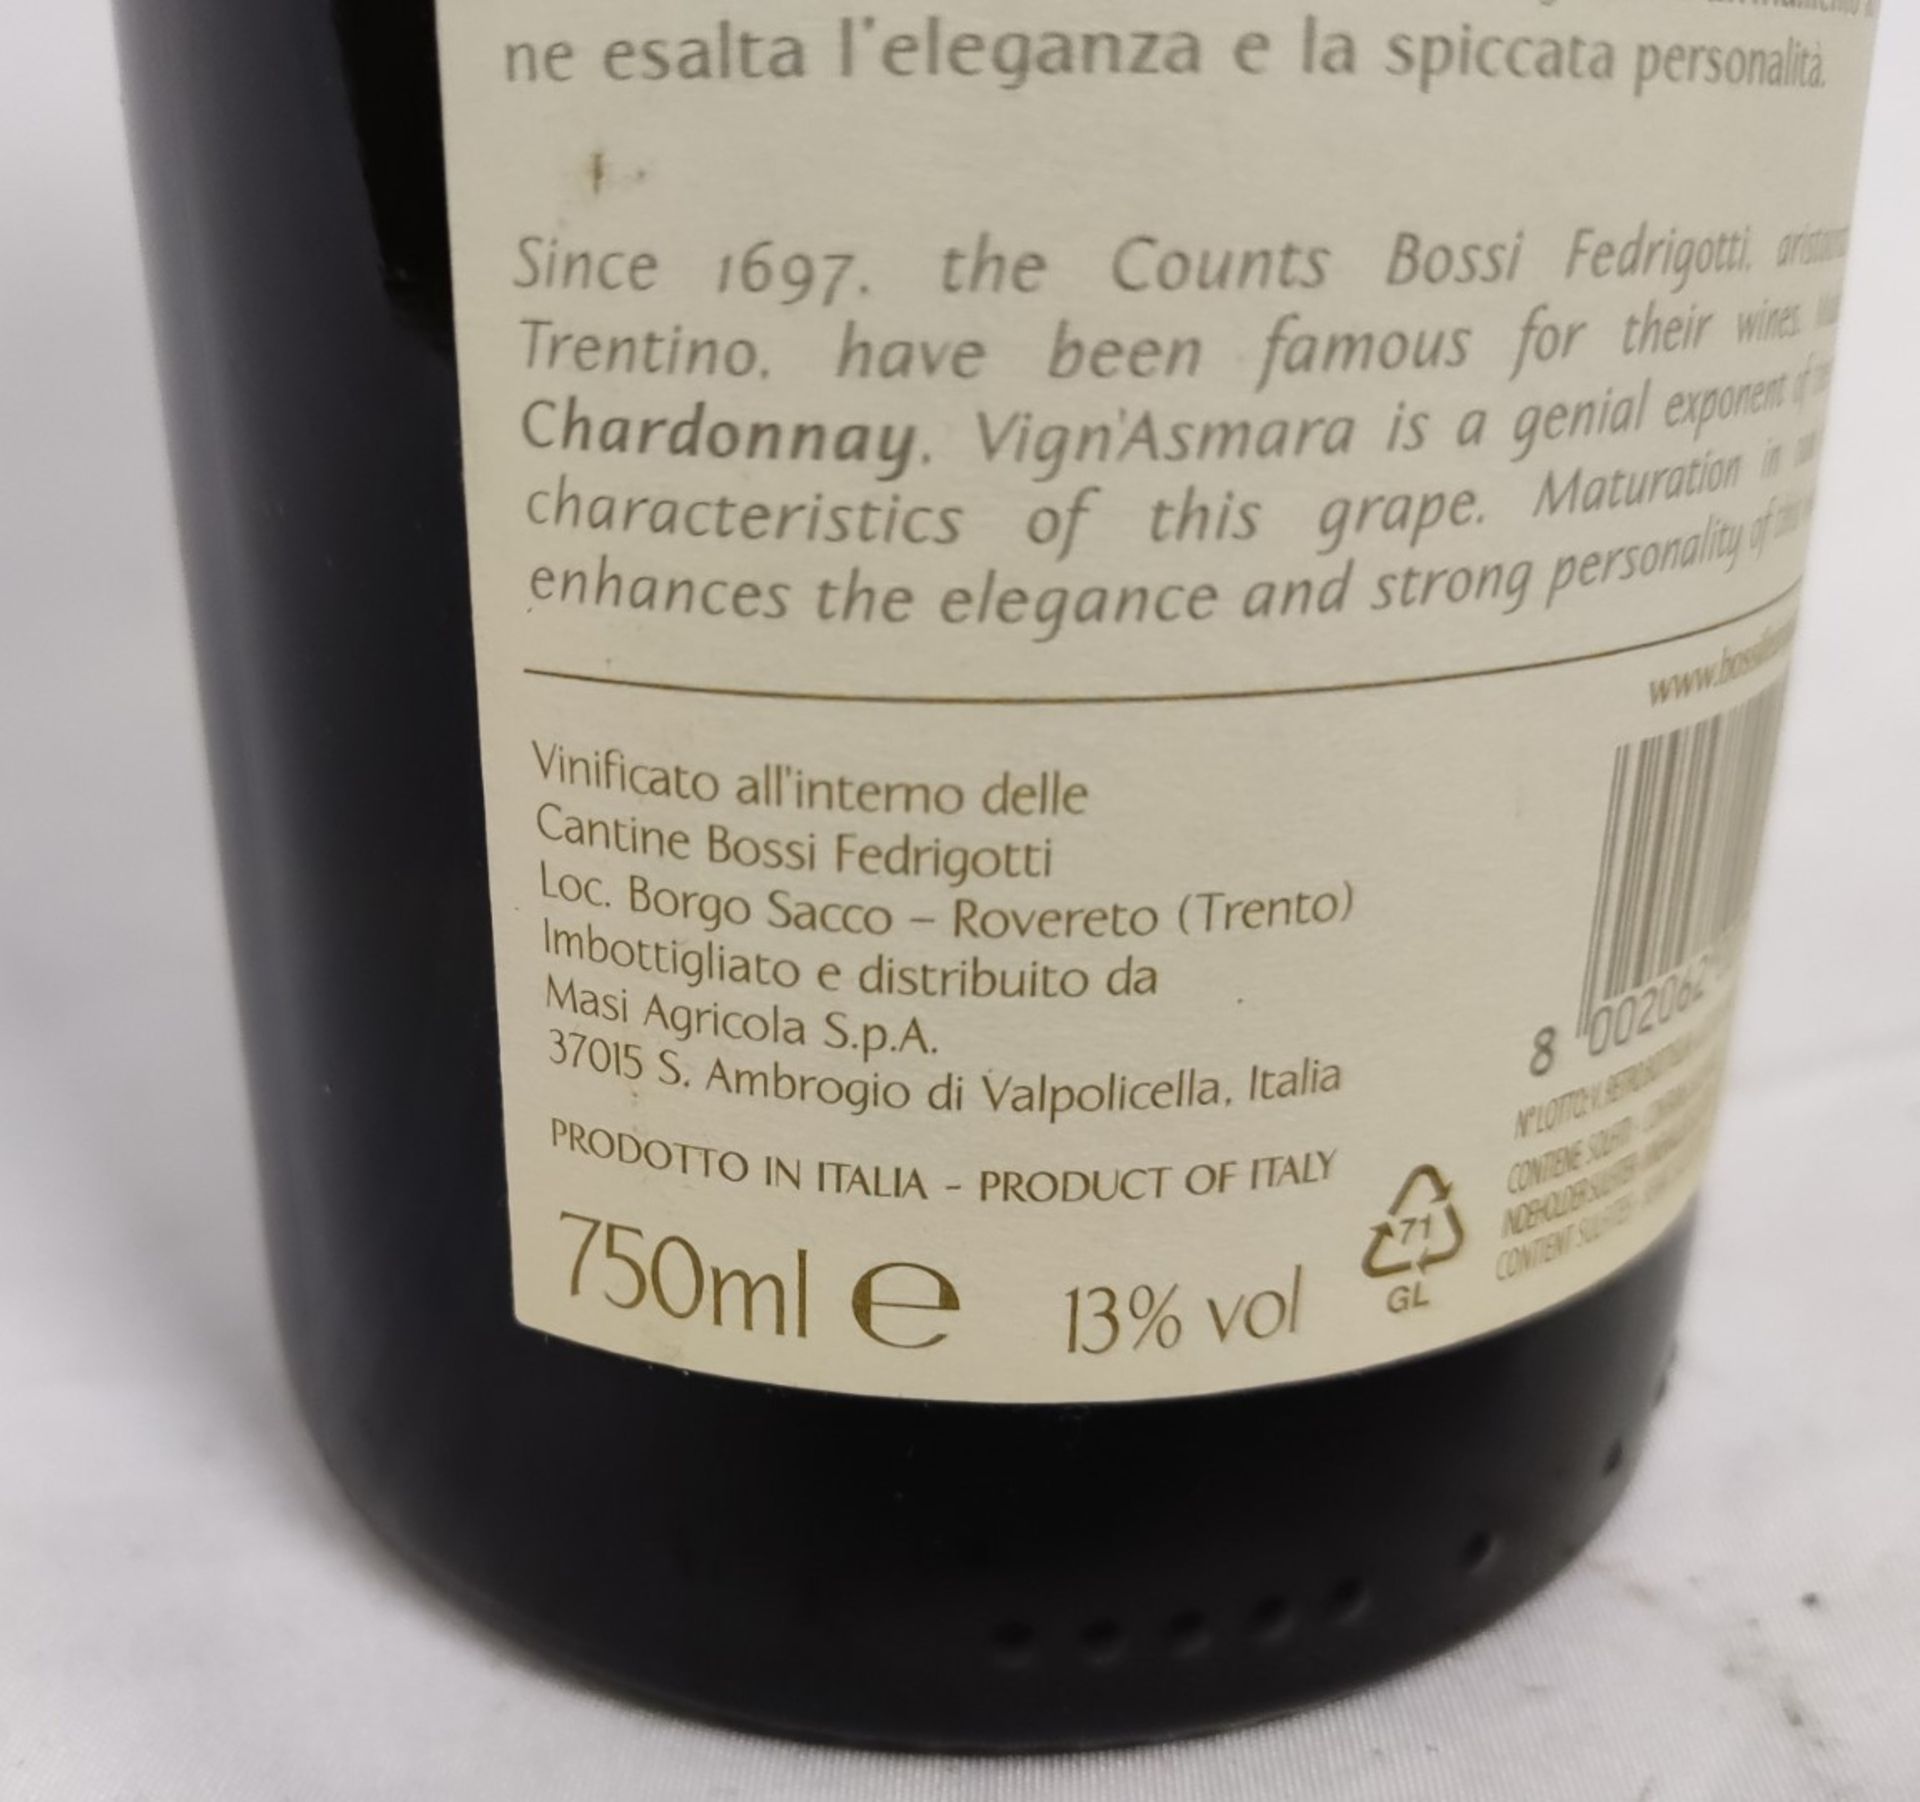 1 x Bottle of 2019 Masi Conti Bossi Fedrigotti Vign'Asmara Vigneti Delle Dolomiti Igt - Image 4 of 5